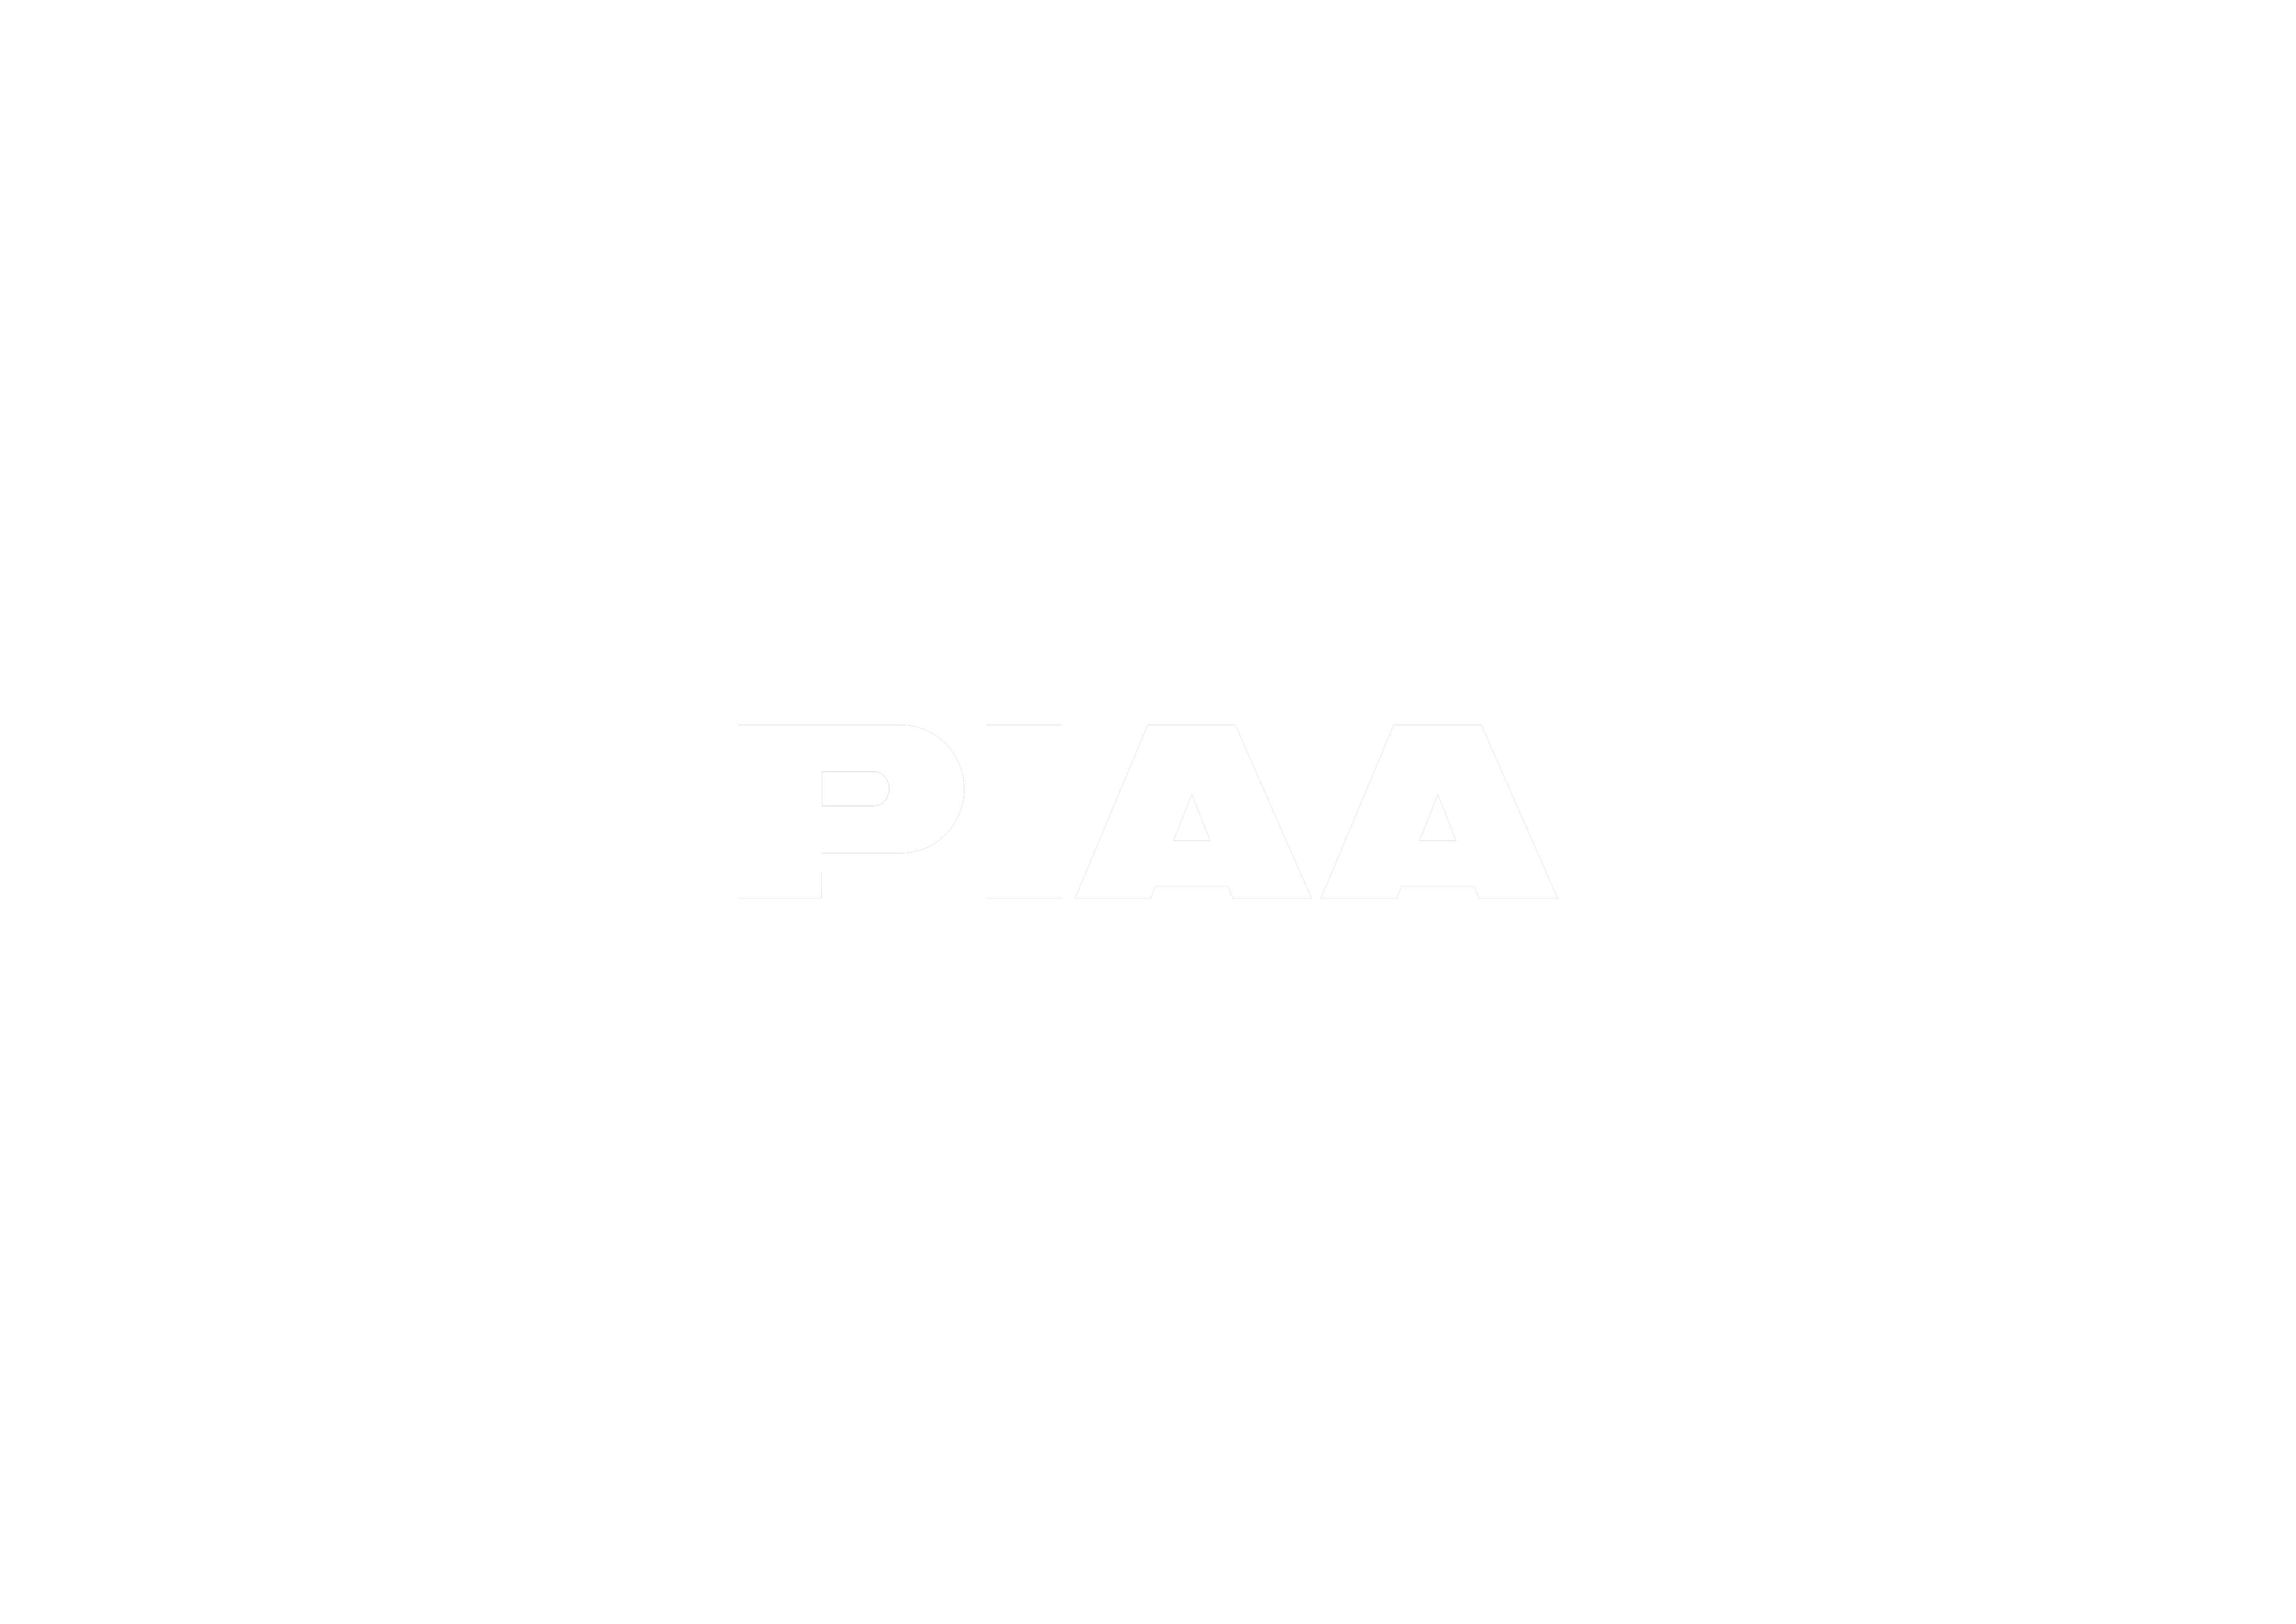 PIAA LOGO Fonts White Transparent backround 1